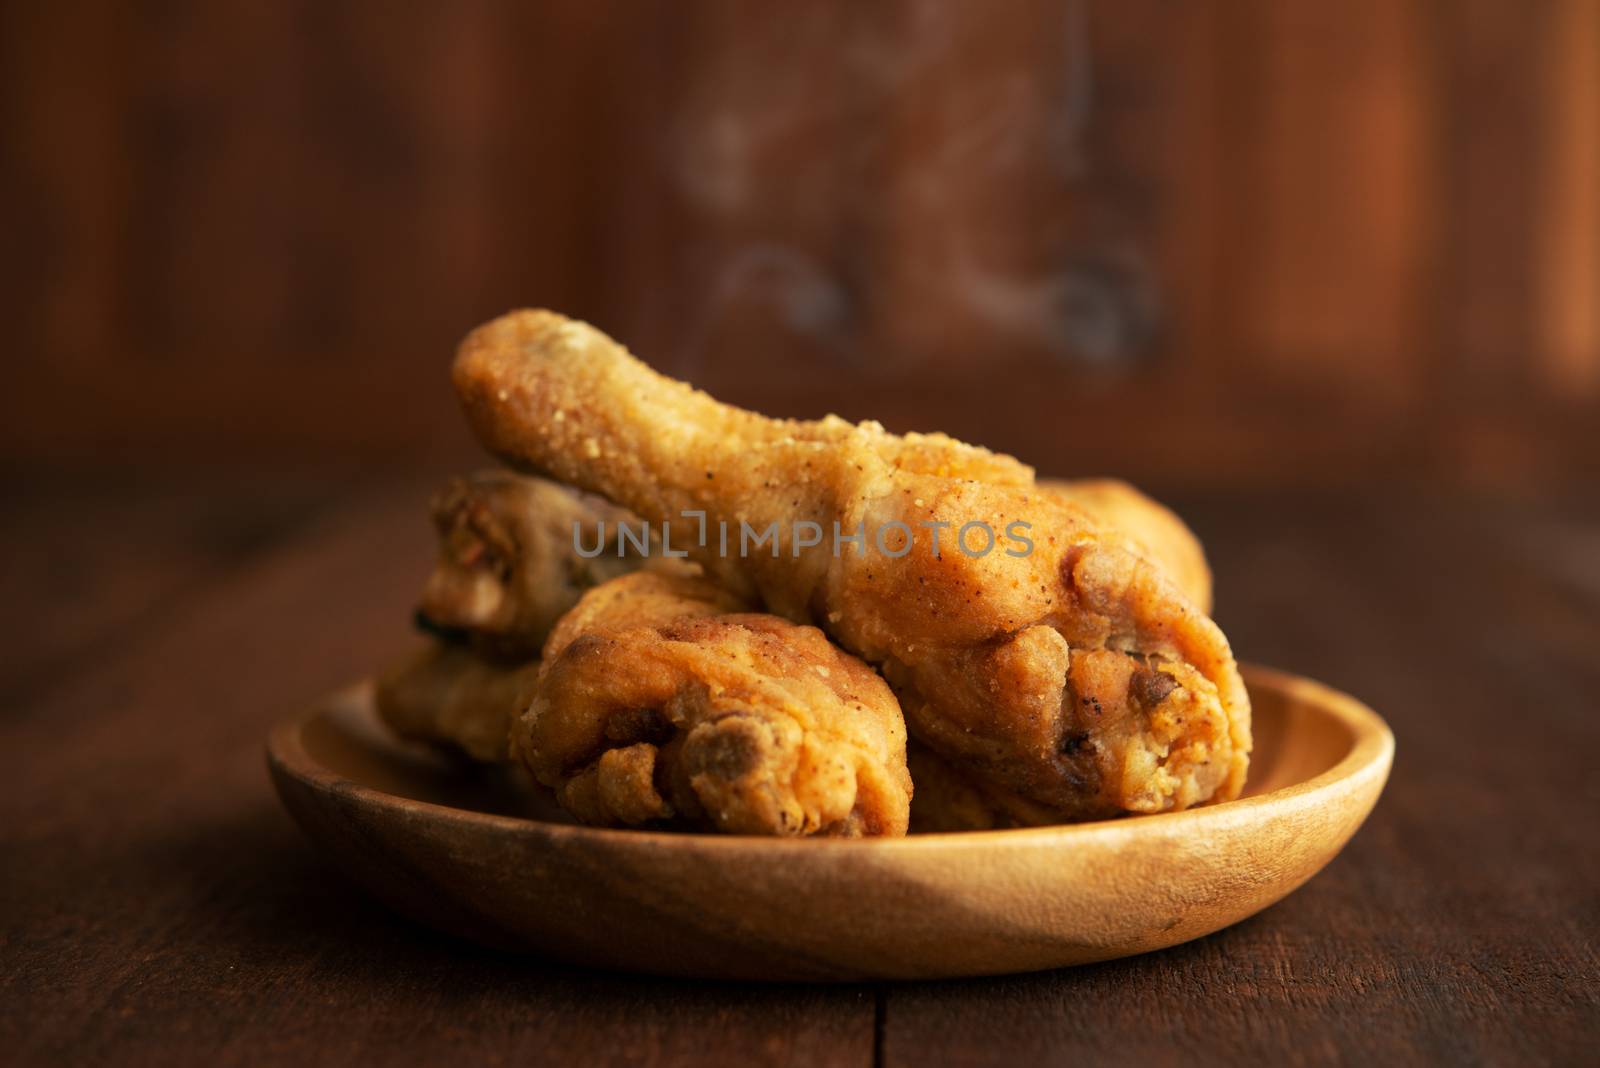 Plate of original recipe fried chickens by szefei